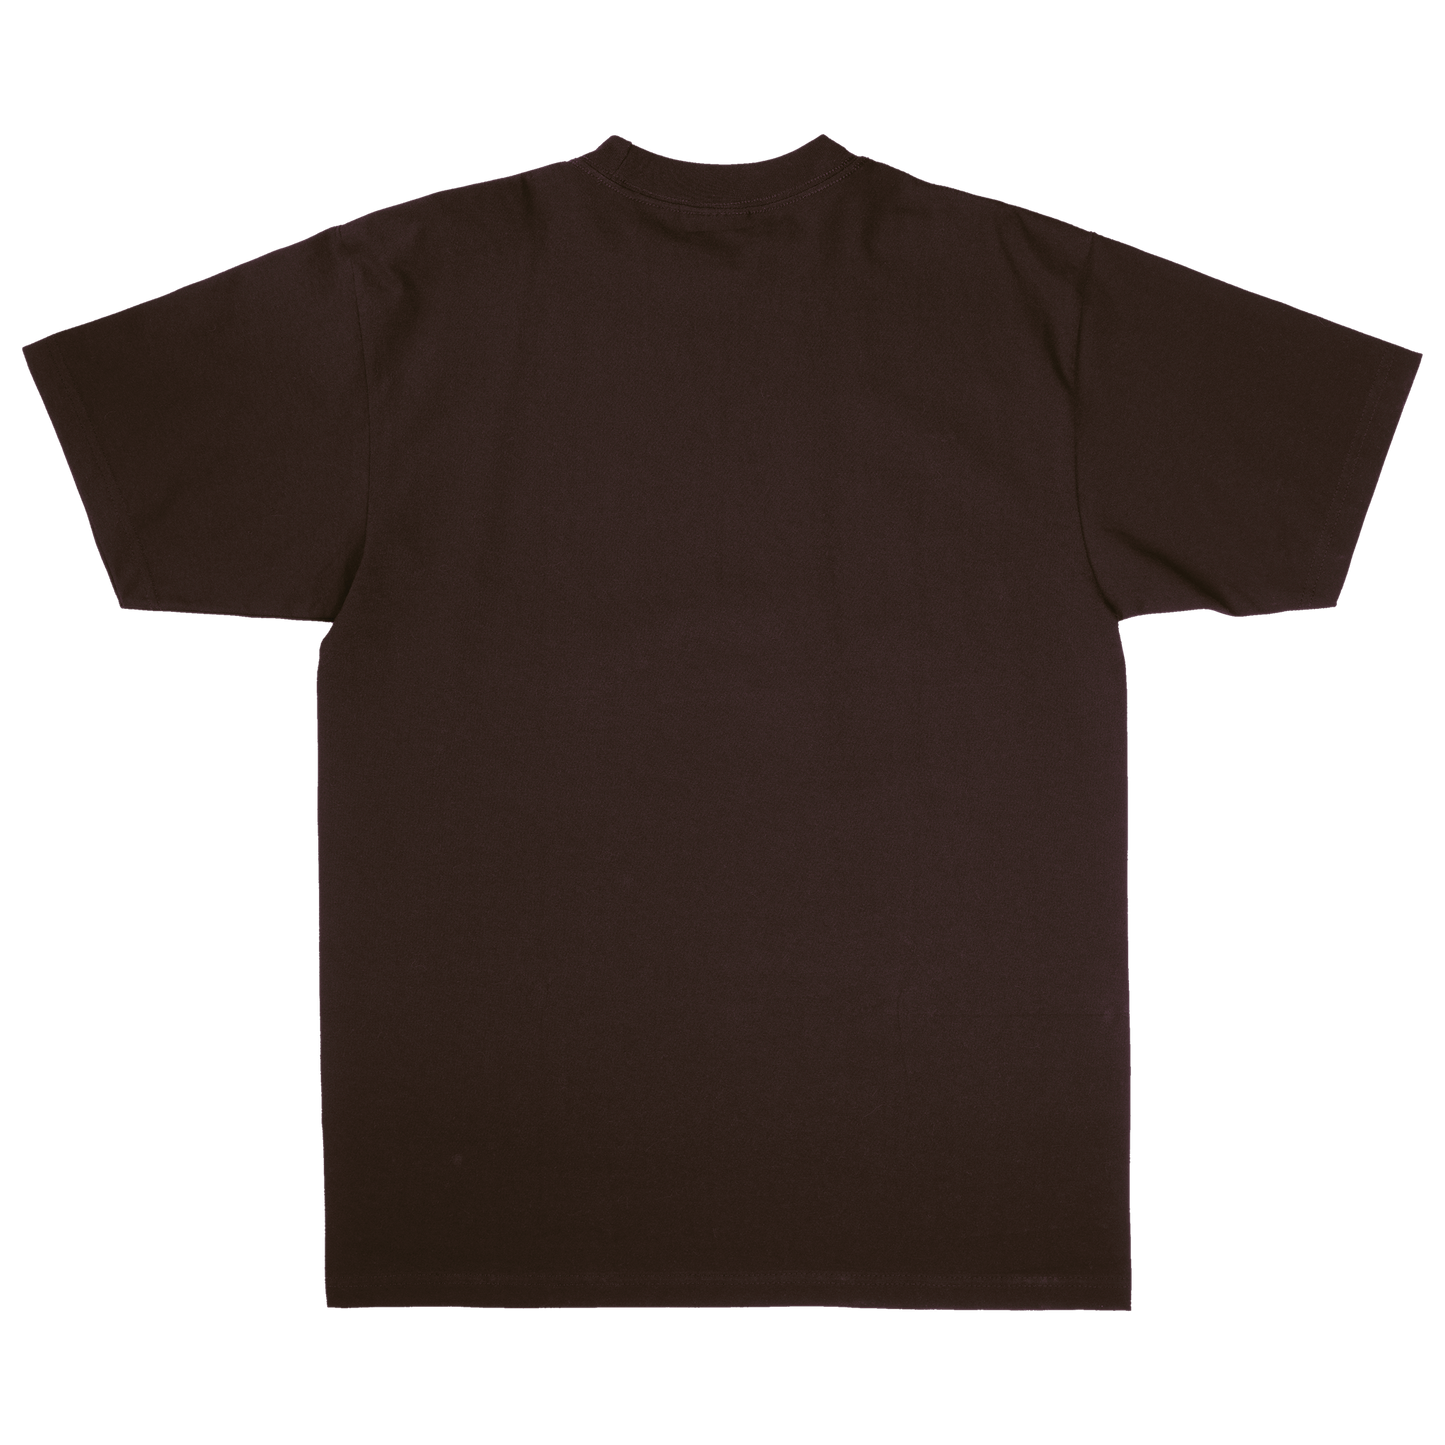 100% Organic Garment-dye T-Shirt